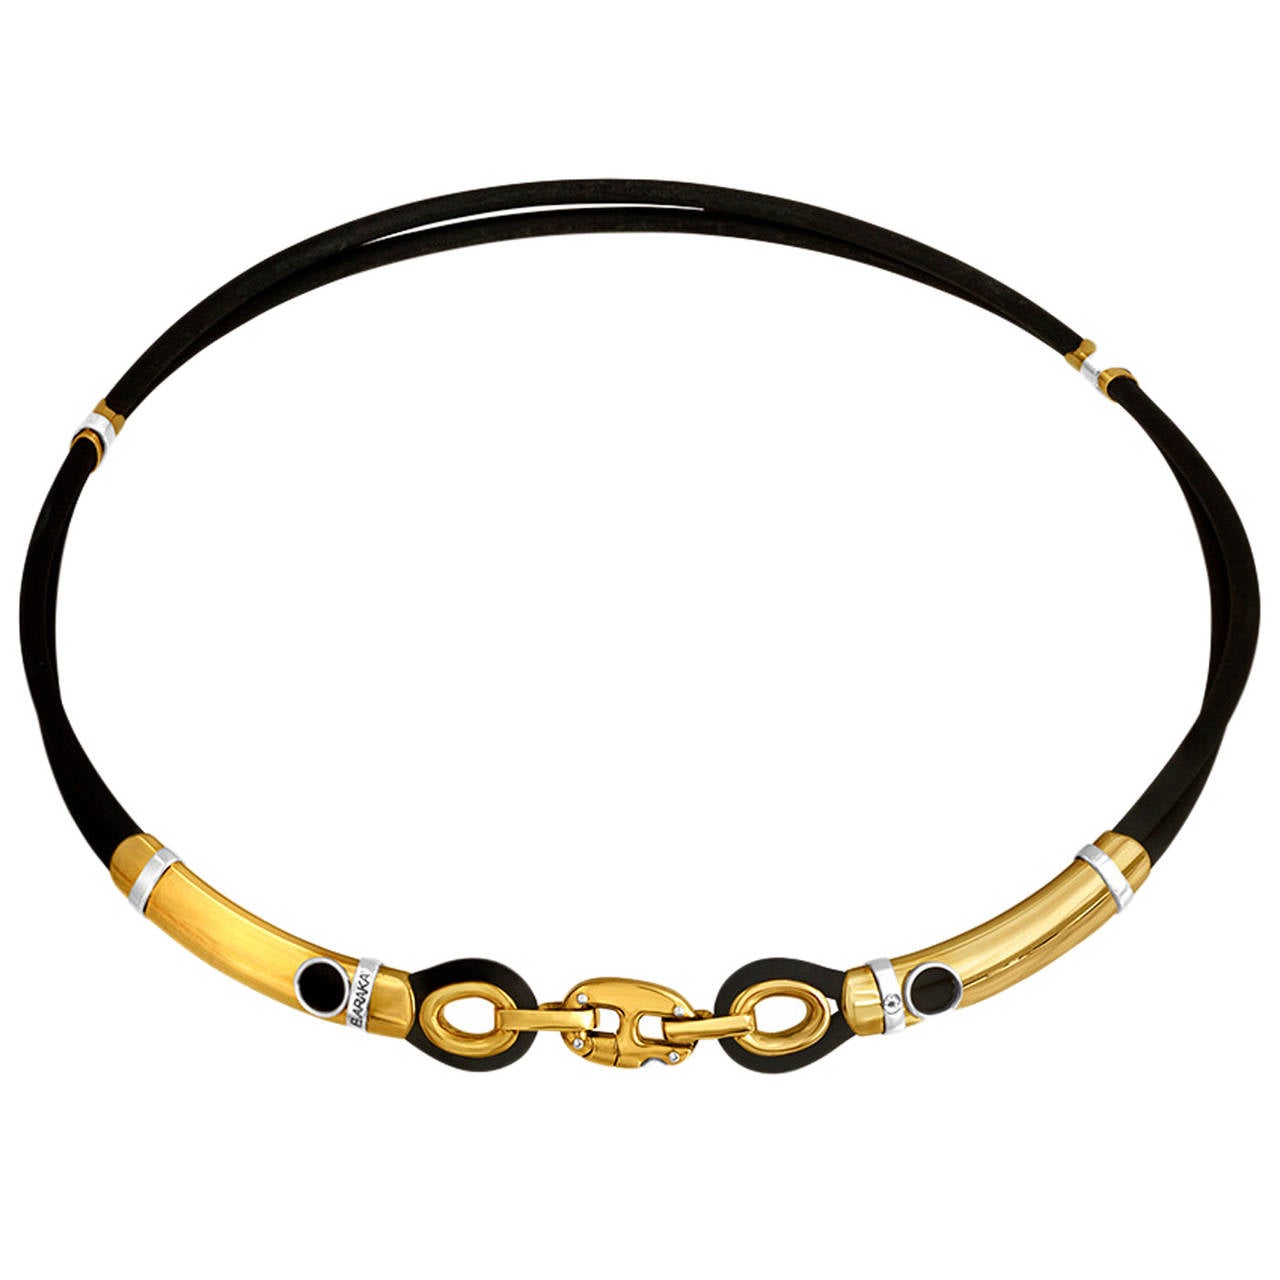 Details about   18K Gold GP Rubber Silicone Vintage Men's Bracelet Bangle Wristband gb2014819 